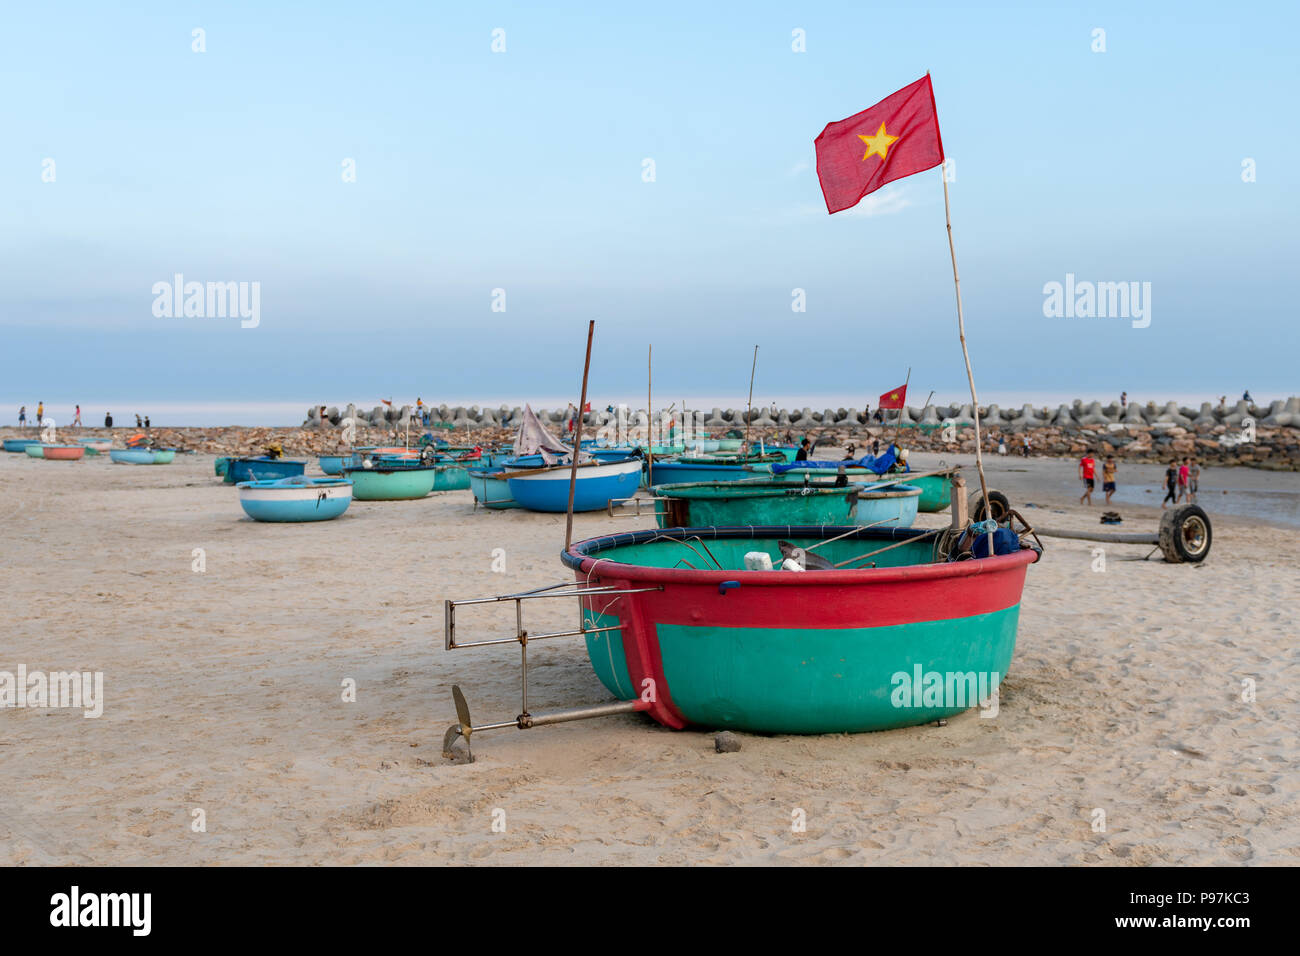 Small fishing boats on Mui Ne beach in southeast Vietnam.  People enjoying time on the beach Stock Photo